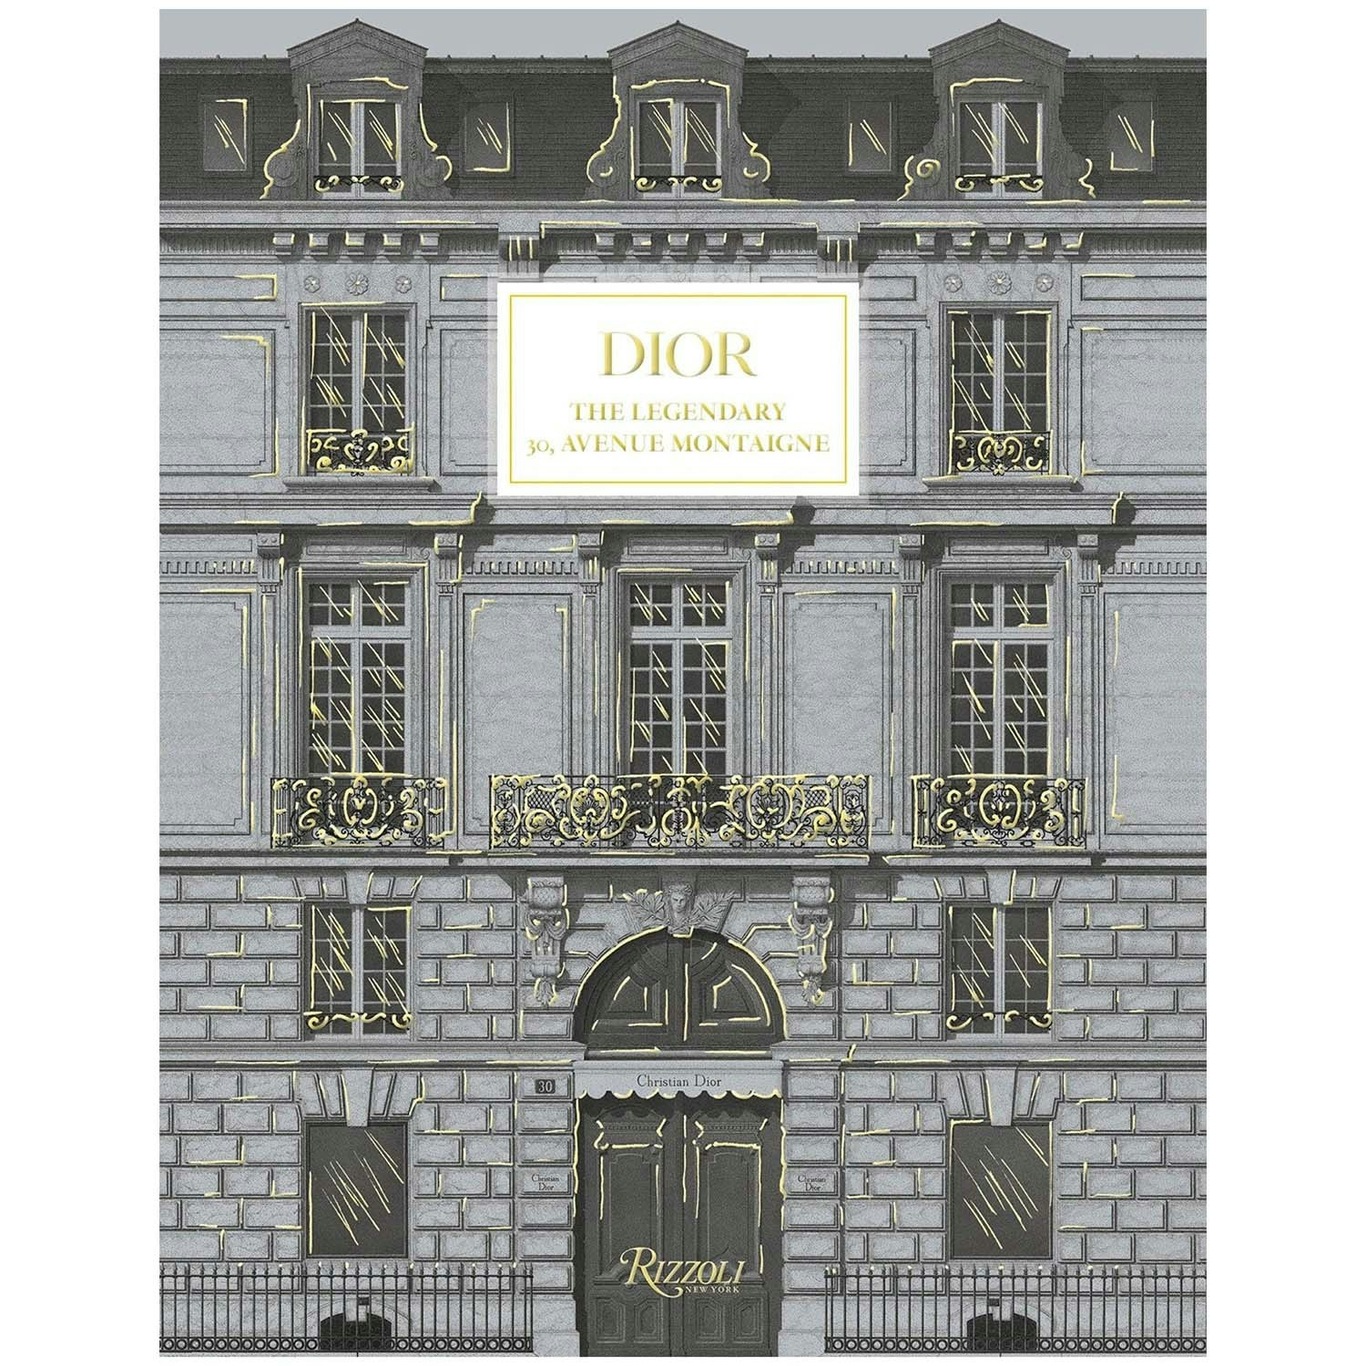 Dior: The Legendary 30, Avenue Montaigne Kirja